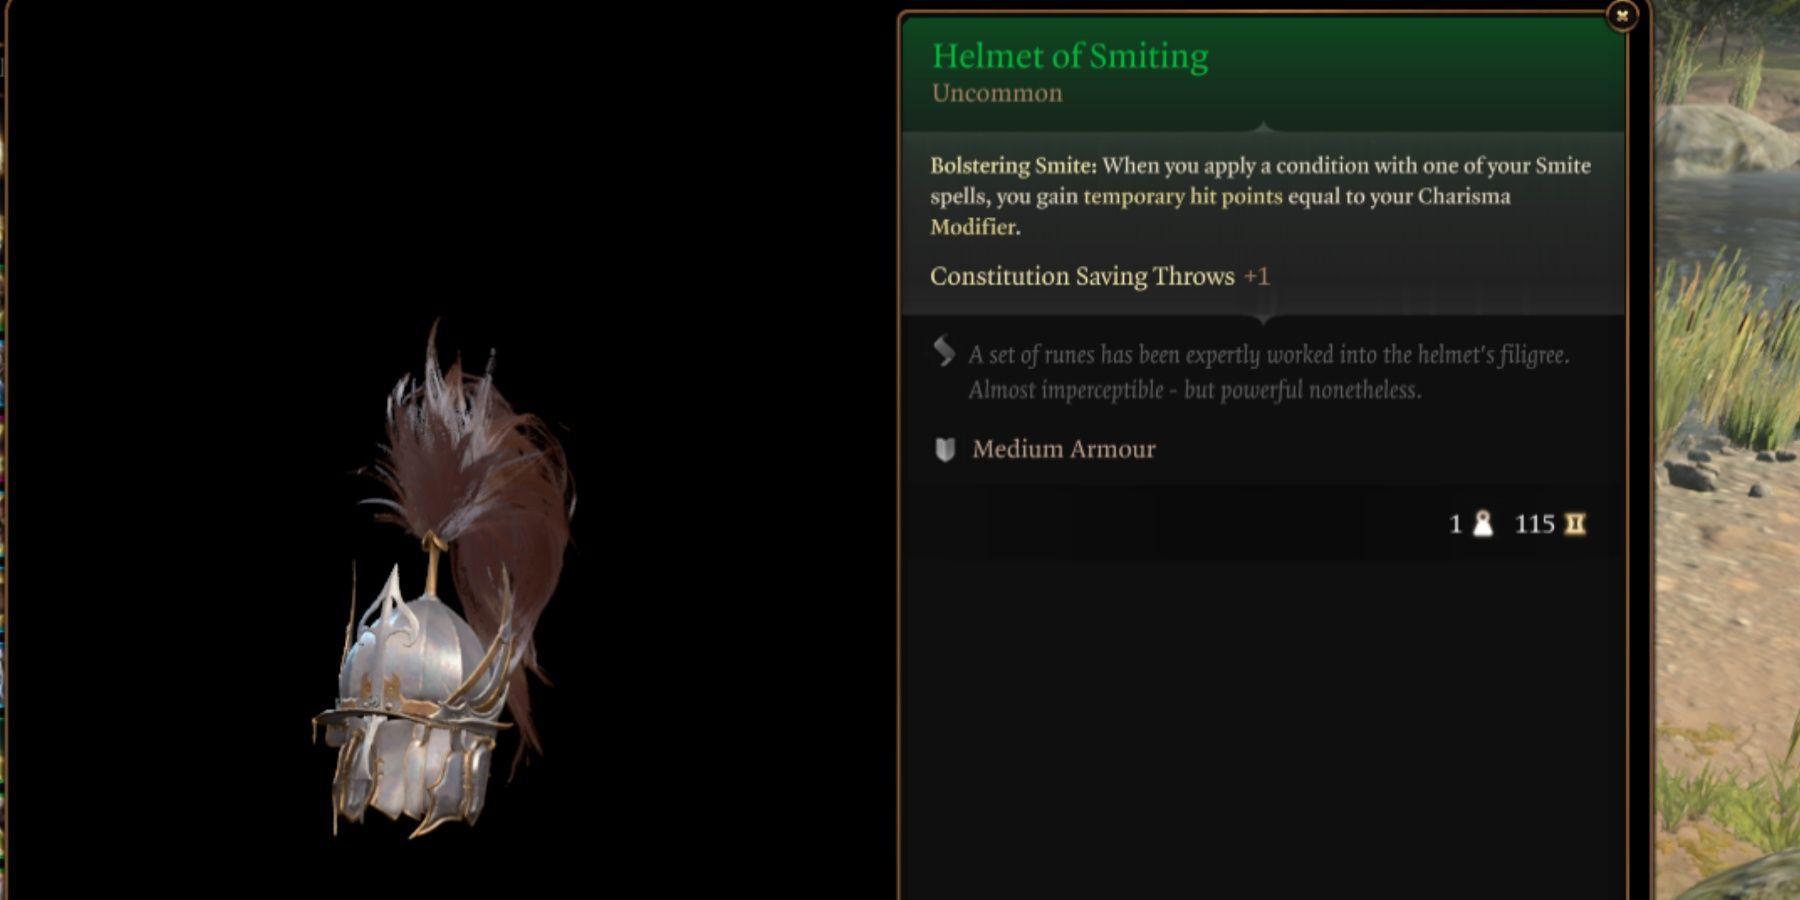 BG3 Helmet of Smiting in-game item menu description